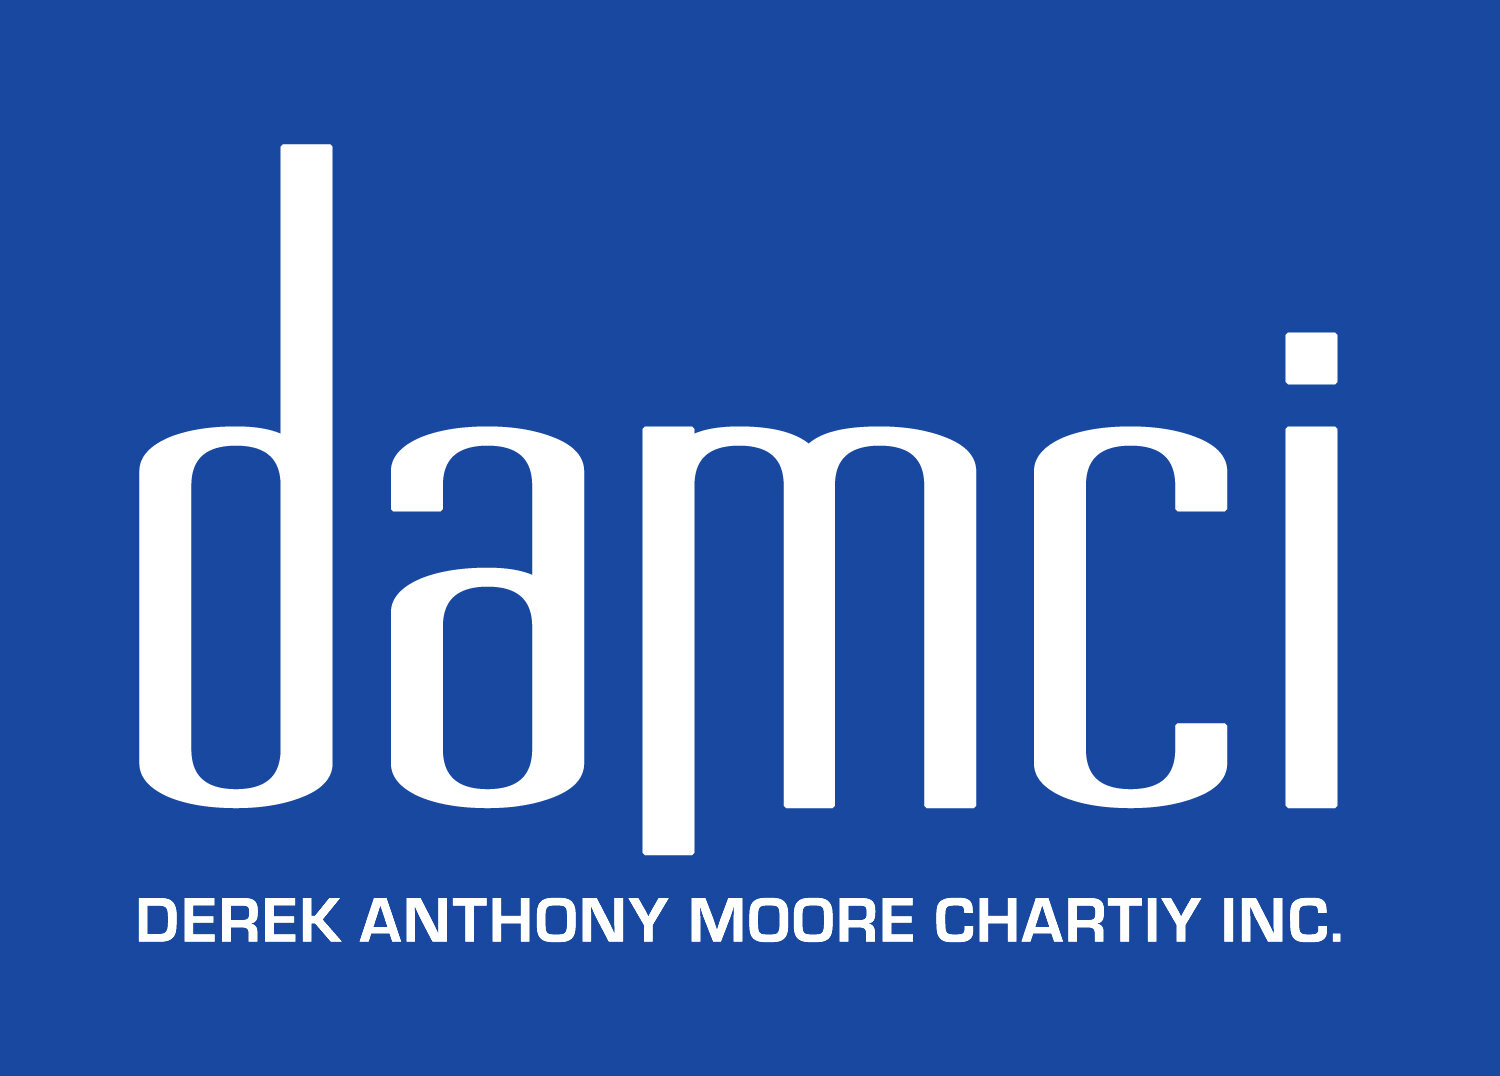 Derek Anthony Moore Charity Inc.